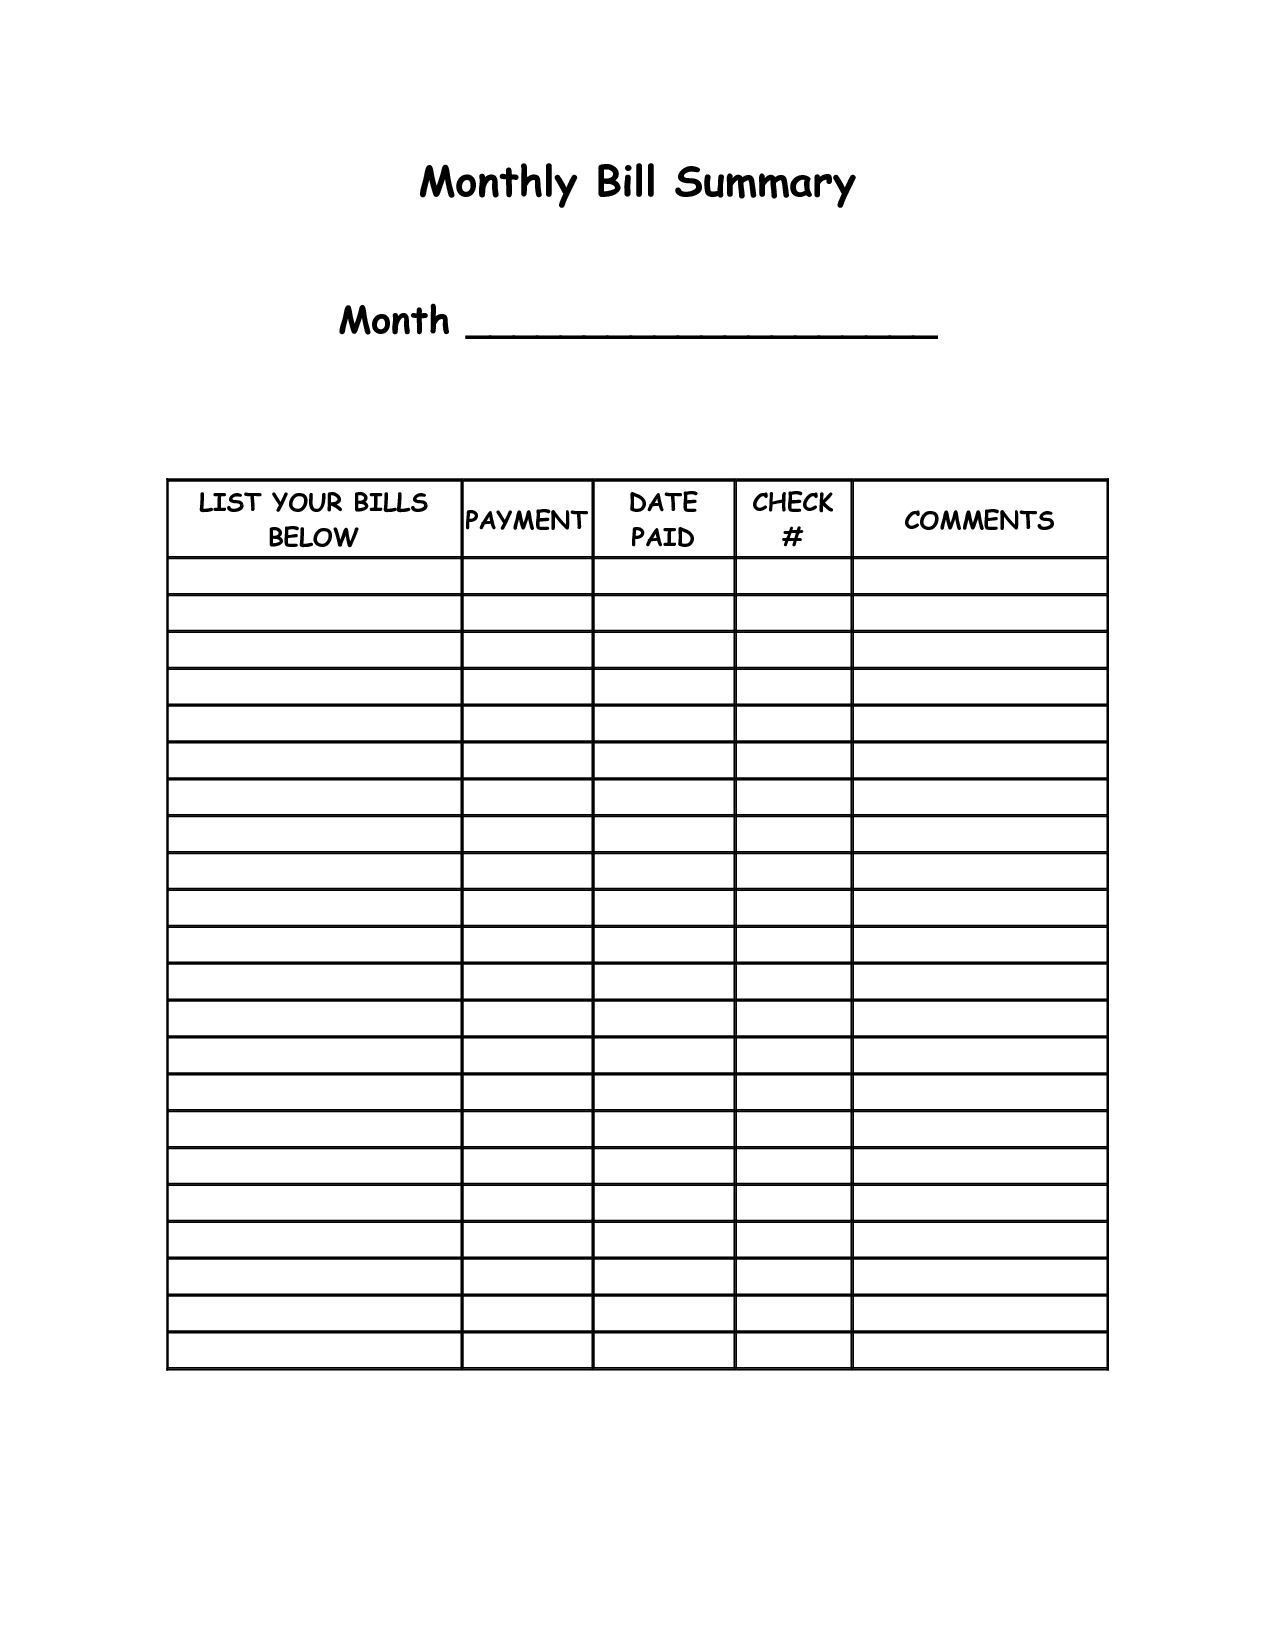 Monthly Bill Summary Doc | Organization | Organizing Monthly Bills - Free Printable Bill Organizer